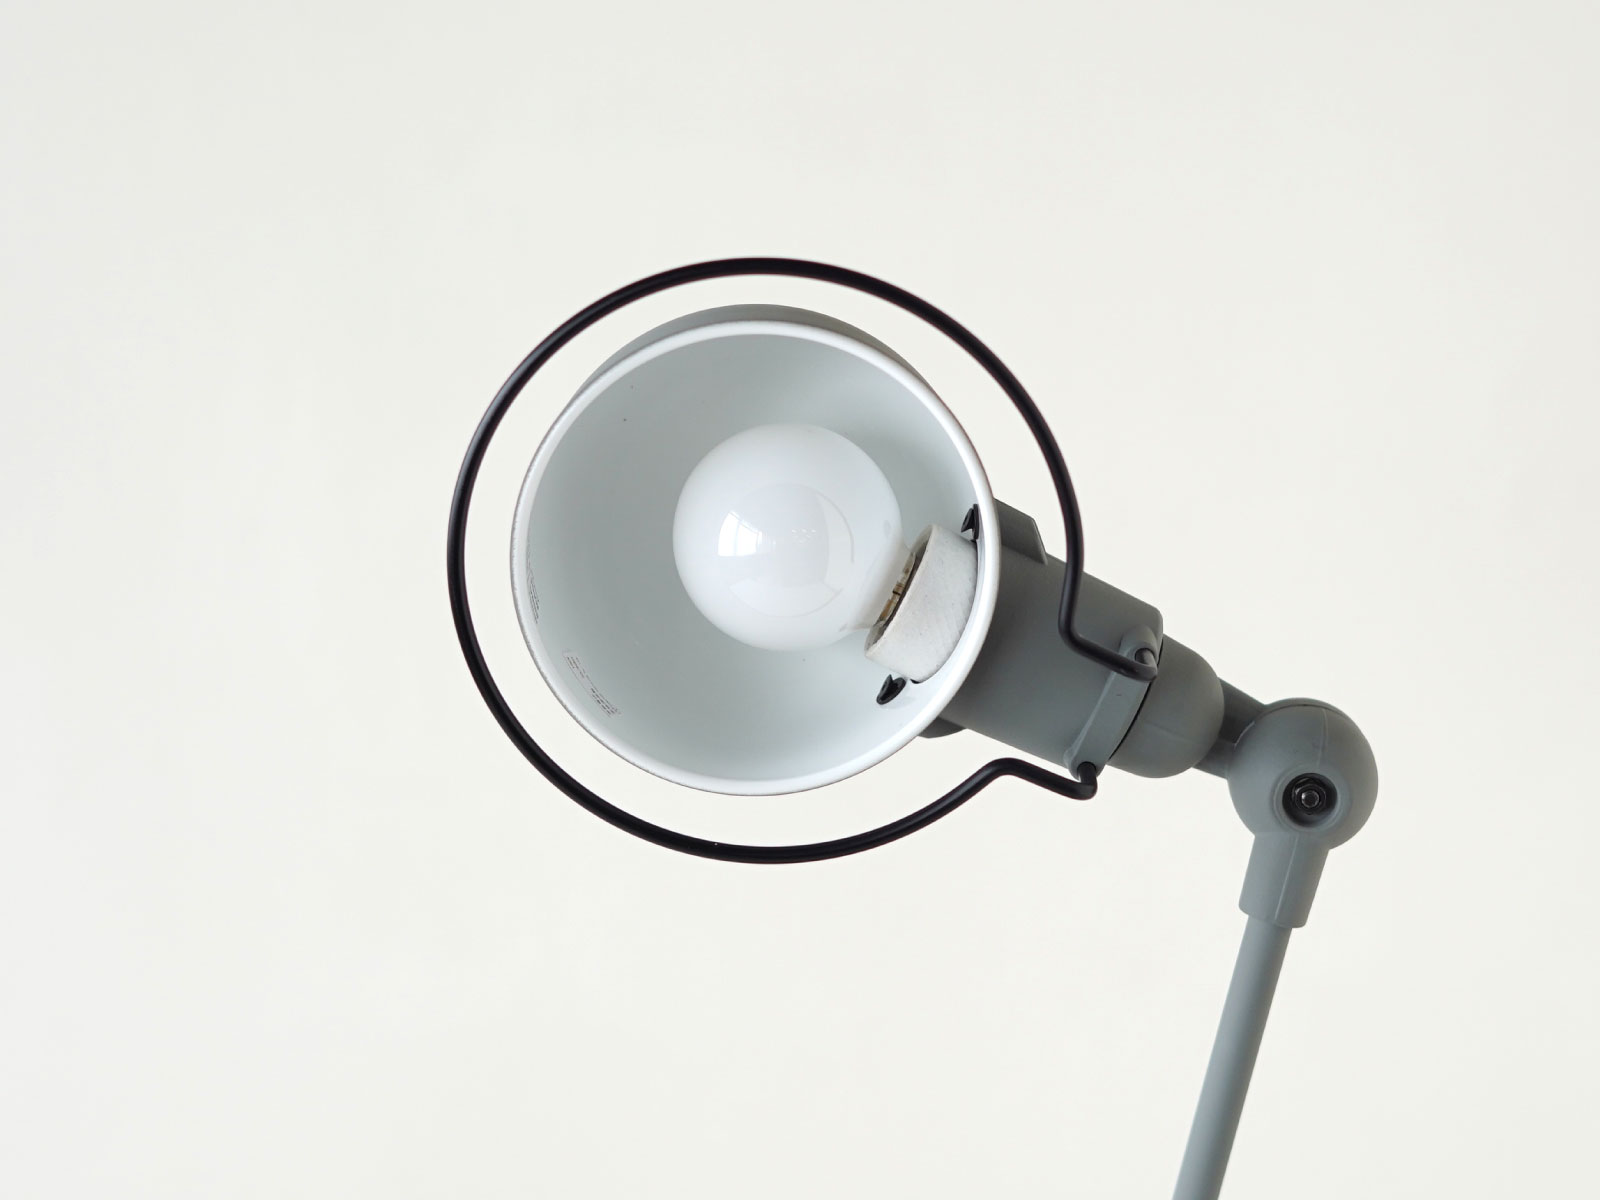 JIELDE/ジェルデ 303 Signal Desk Lamp デスクライト マットグレー